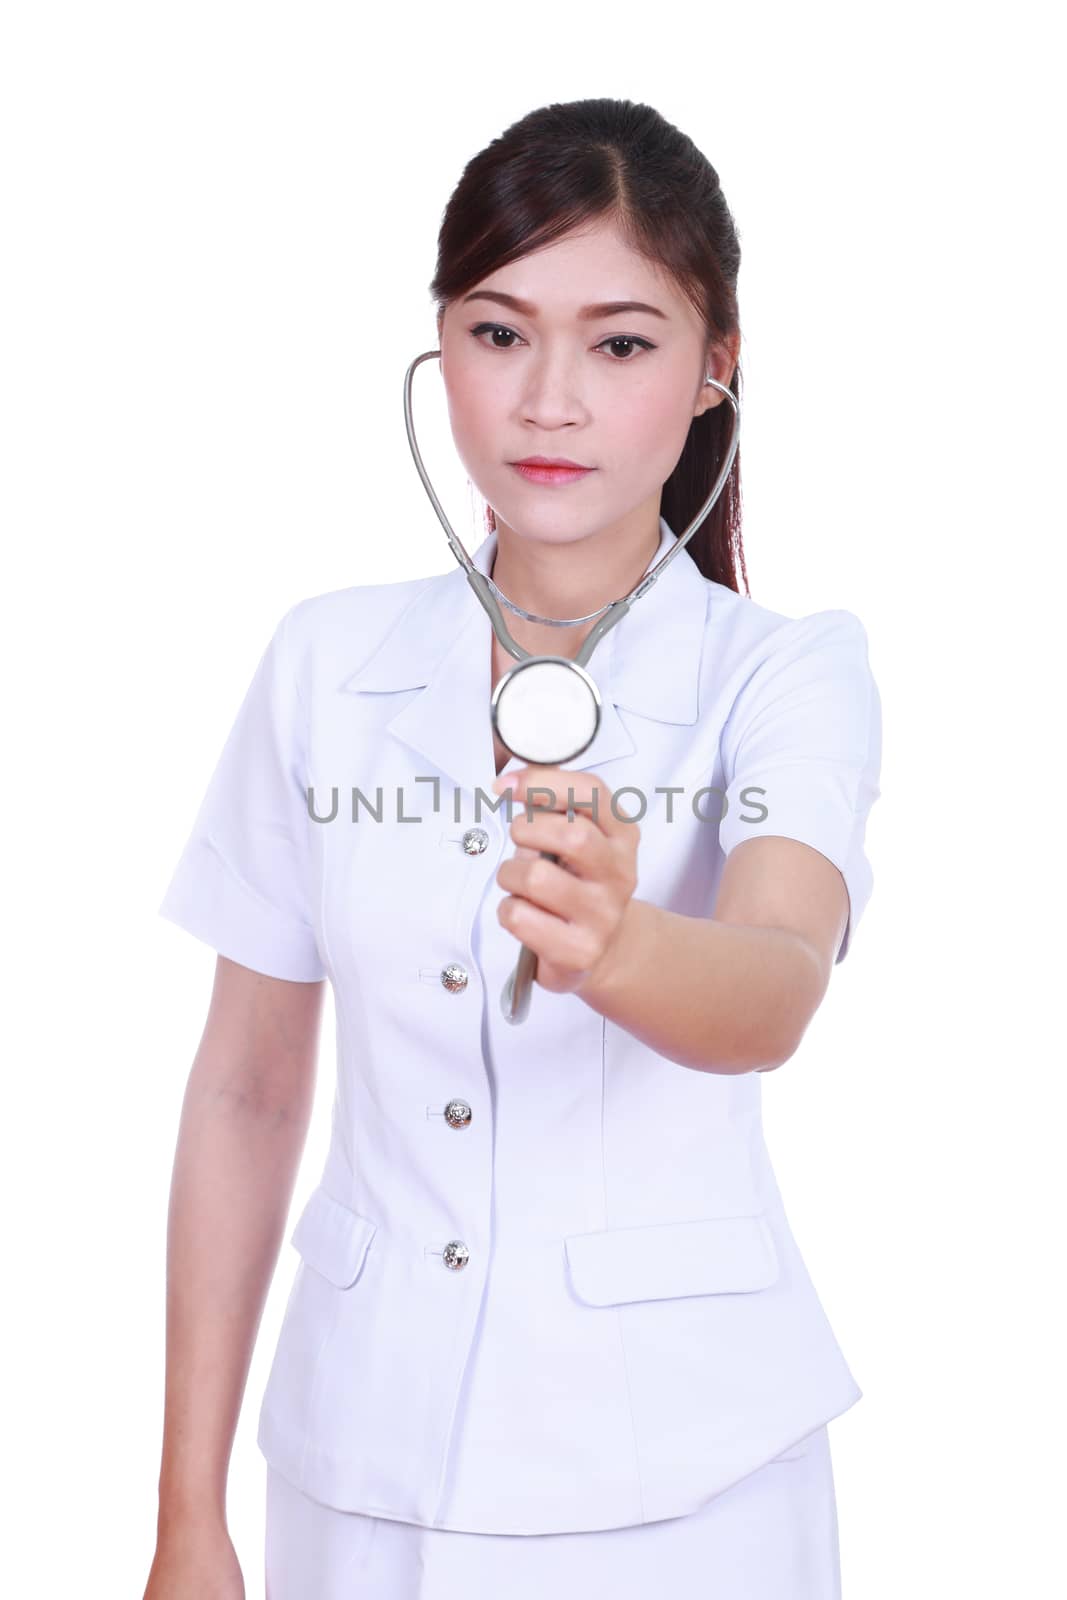 nurse with stethoscope isolated on white background by geargodz